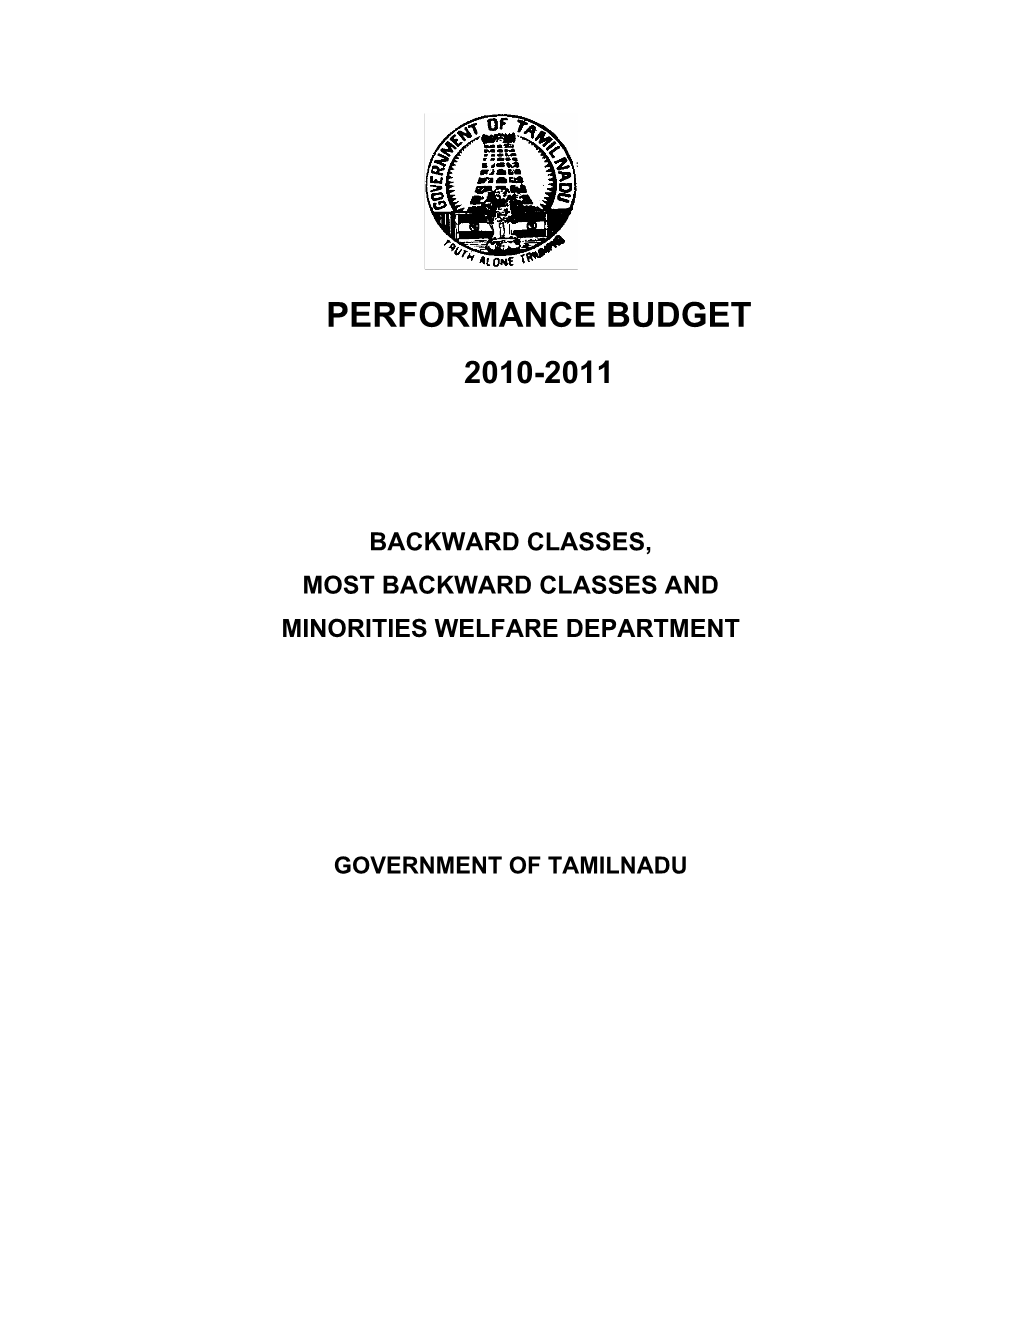 Performance Budget 2010-2011